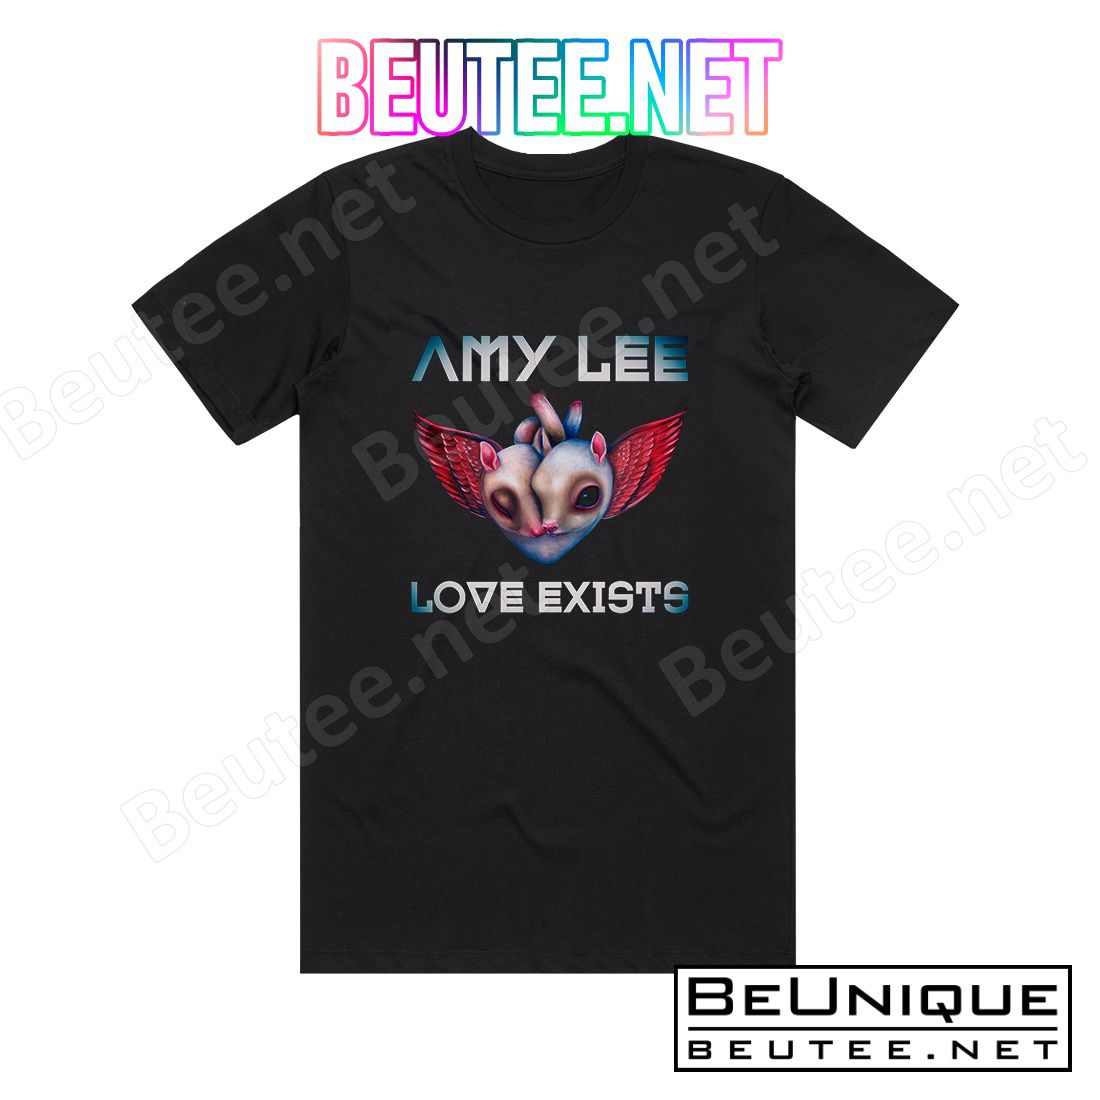 Amy Lee Love Exists Album Cover T-Shirt